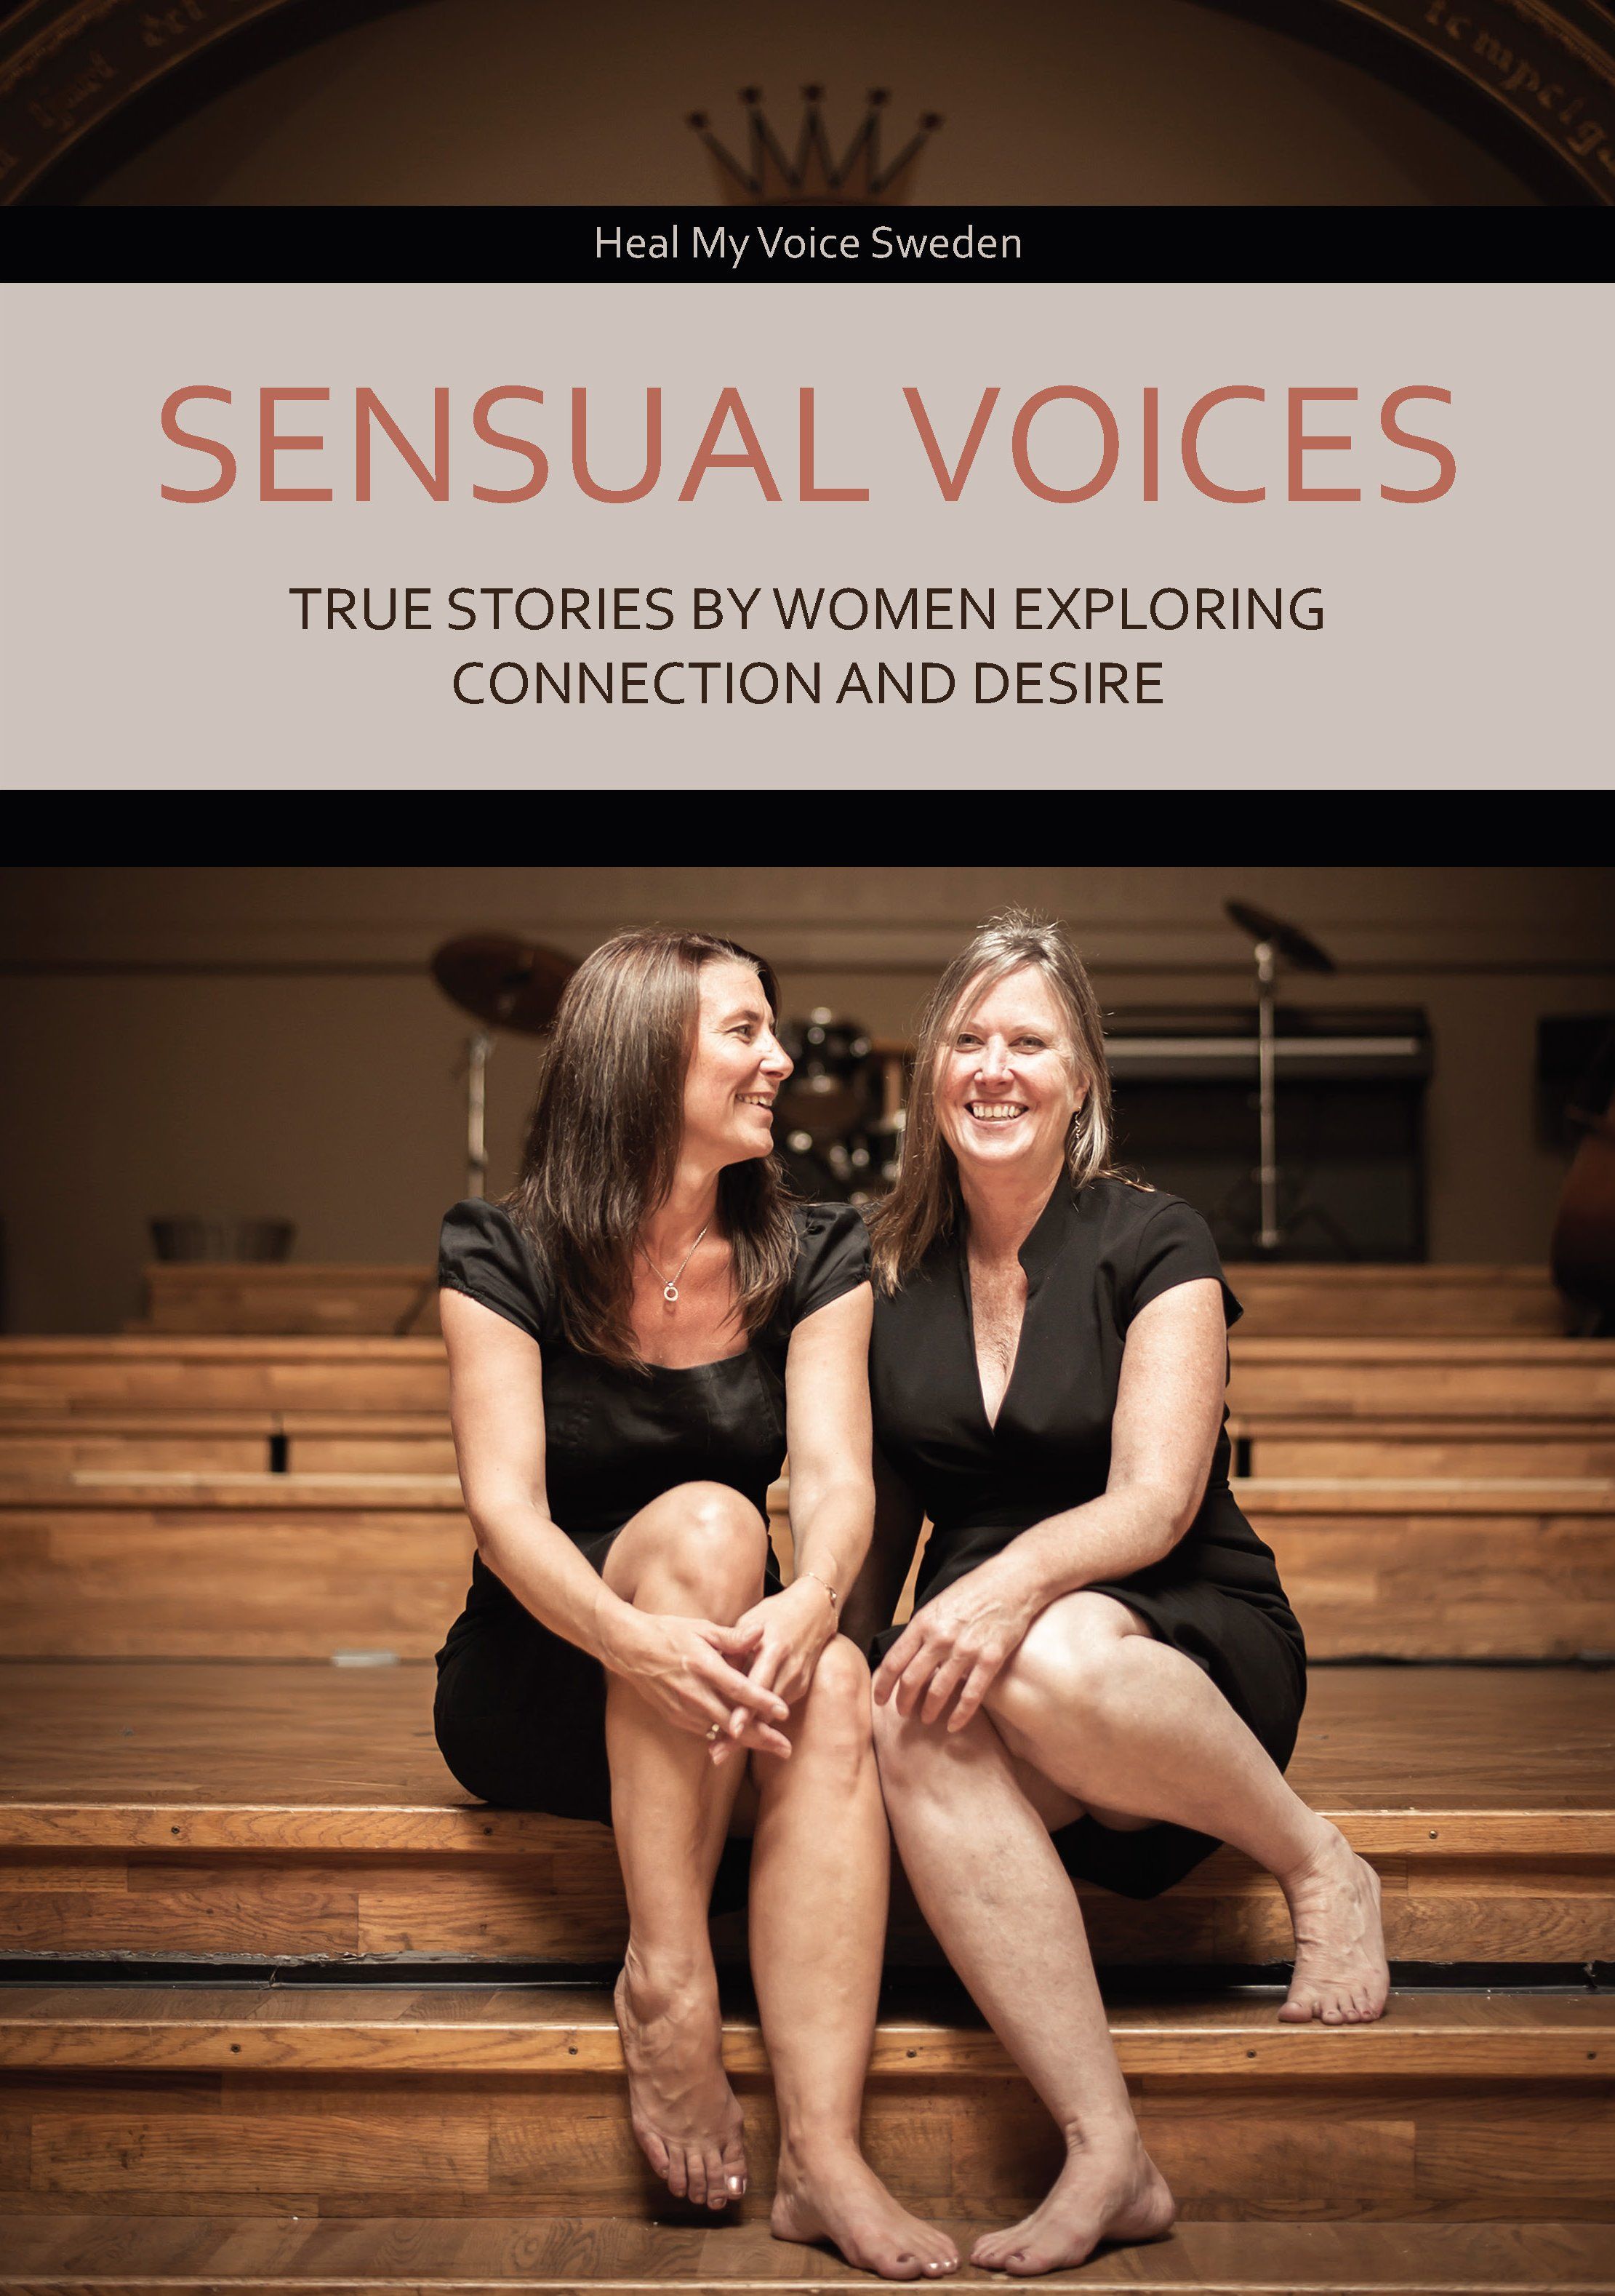 Sensual voices, eBook by Marie Ek Lipanovska